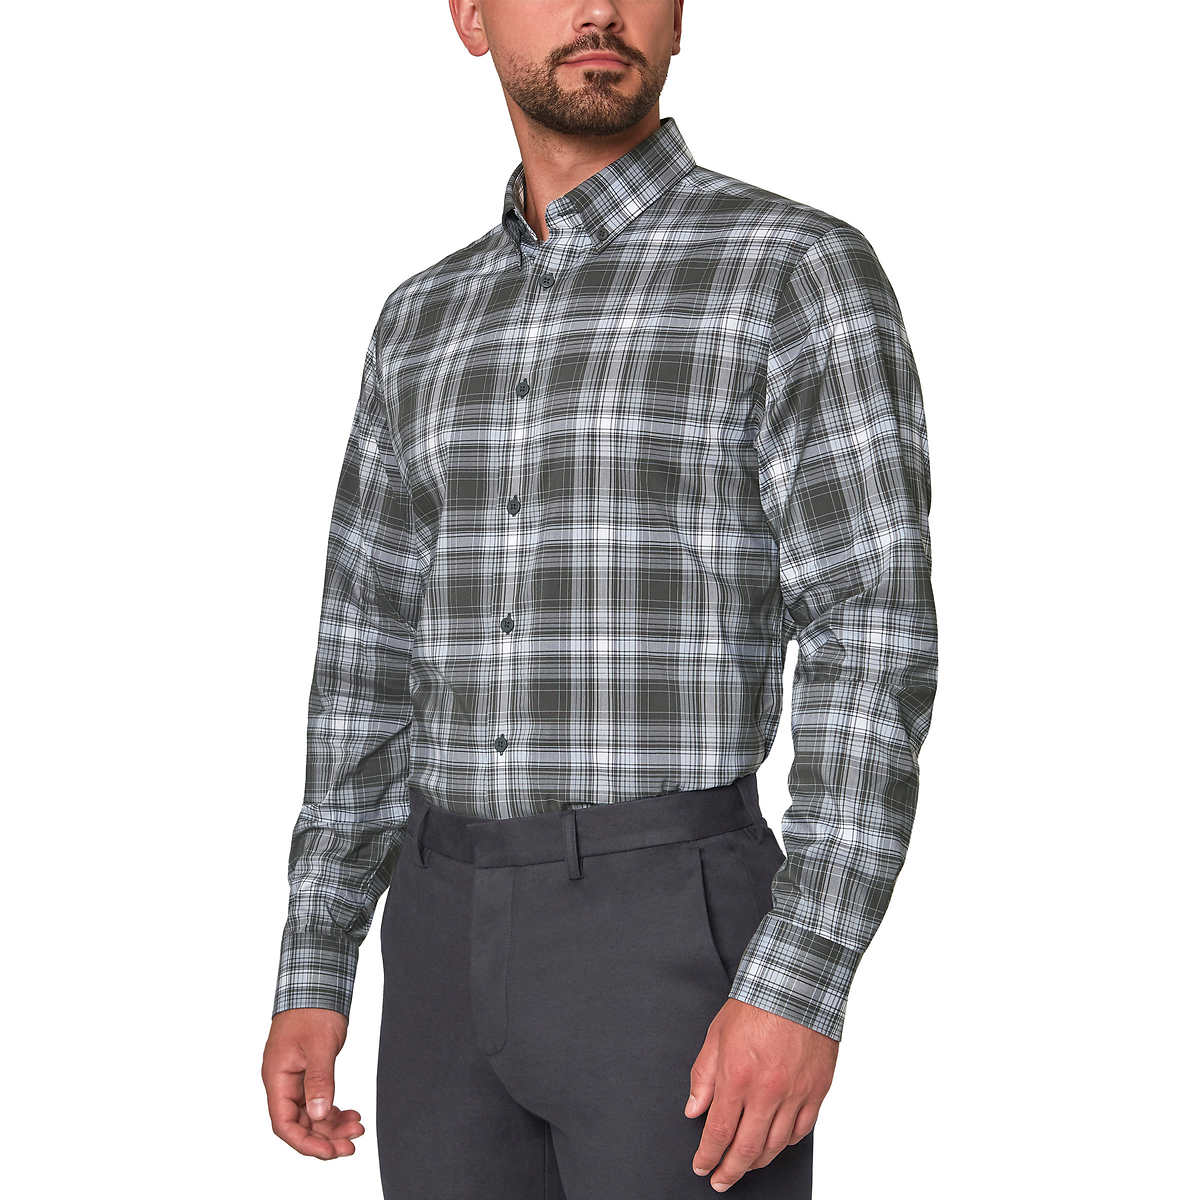 Mens Shirts Casual Stylish Winter, Men's Fishing Shirts Long Sleeve Travel  Work Shirts Button Down Shirts with Pockets (Black,Medium) at  Men's  Clothing store